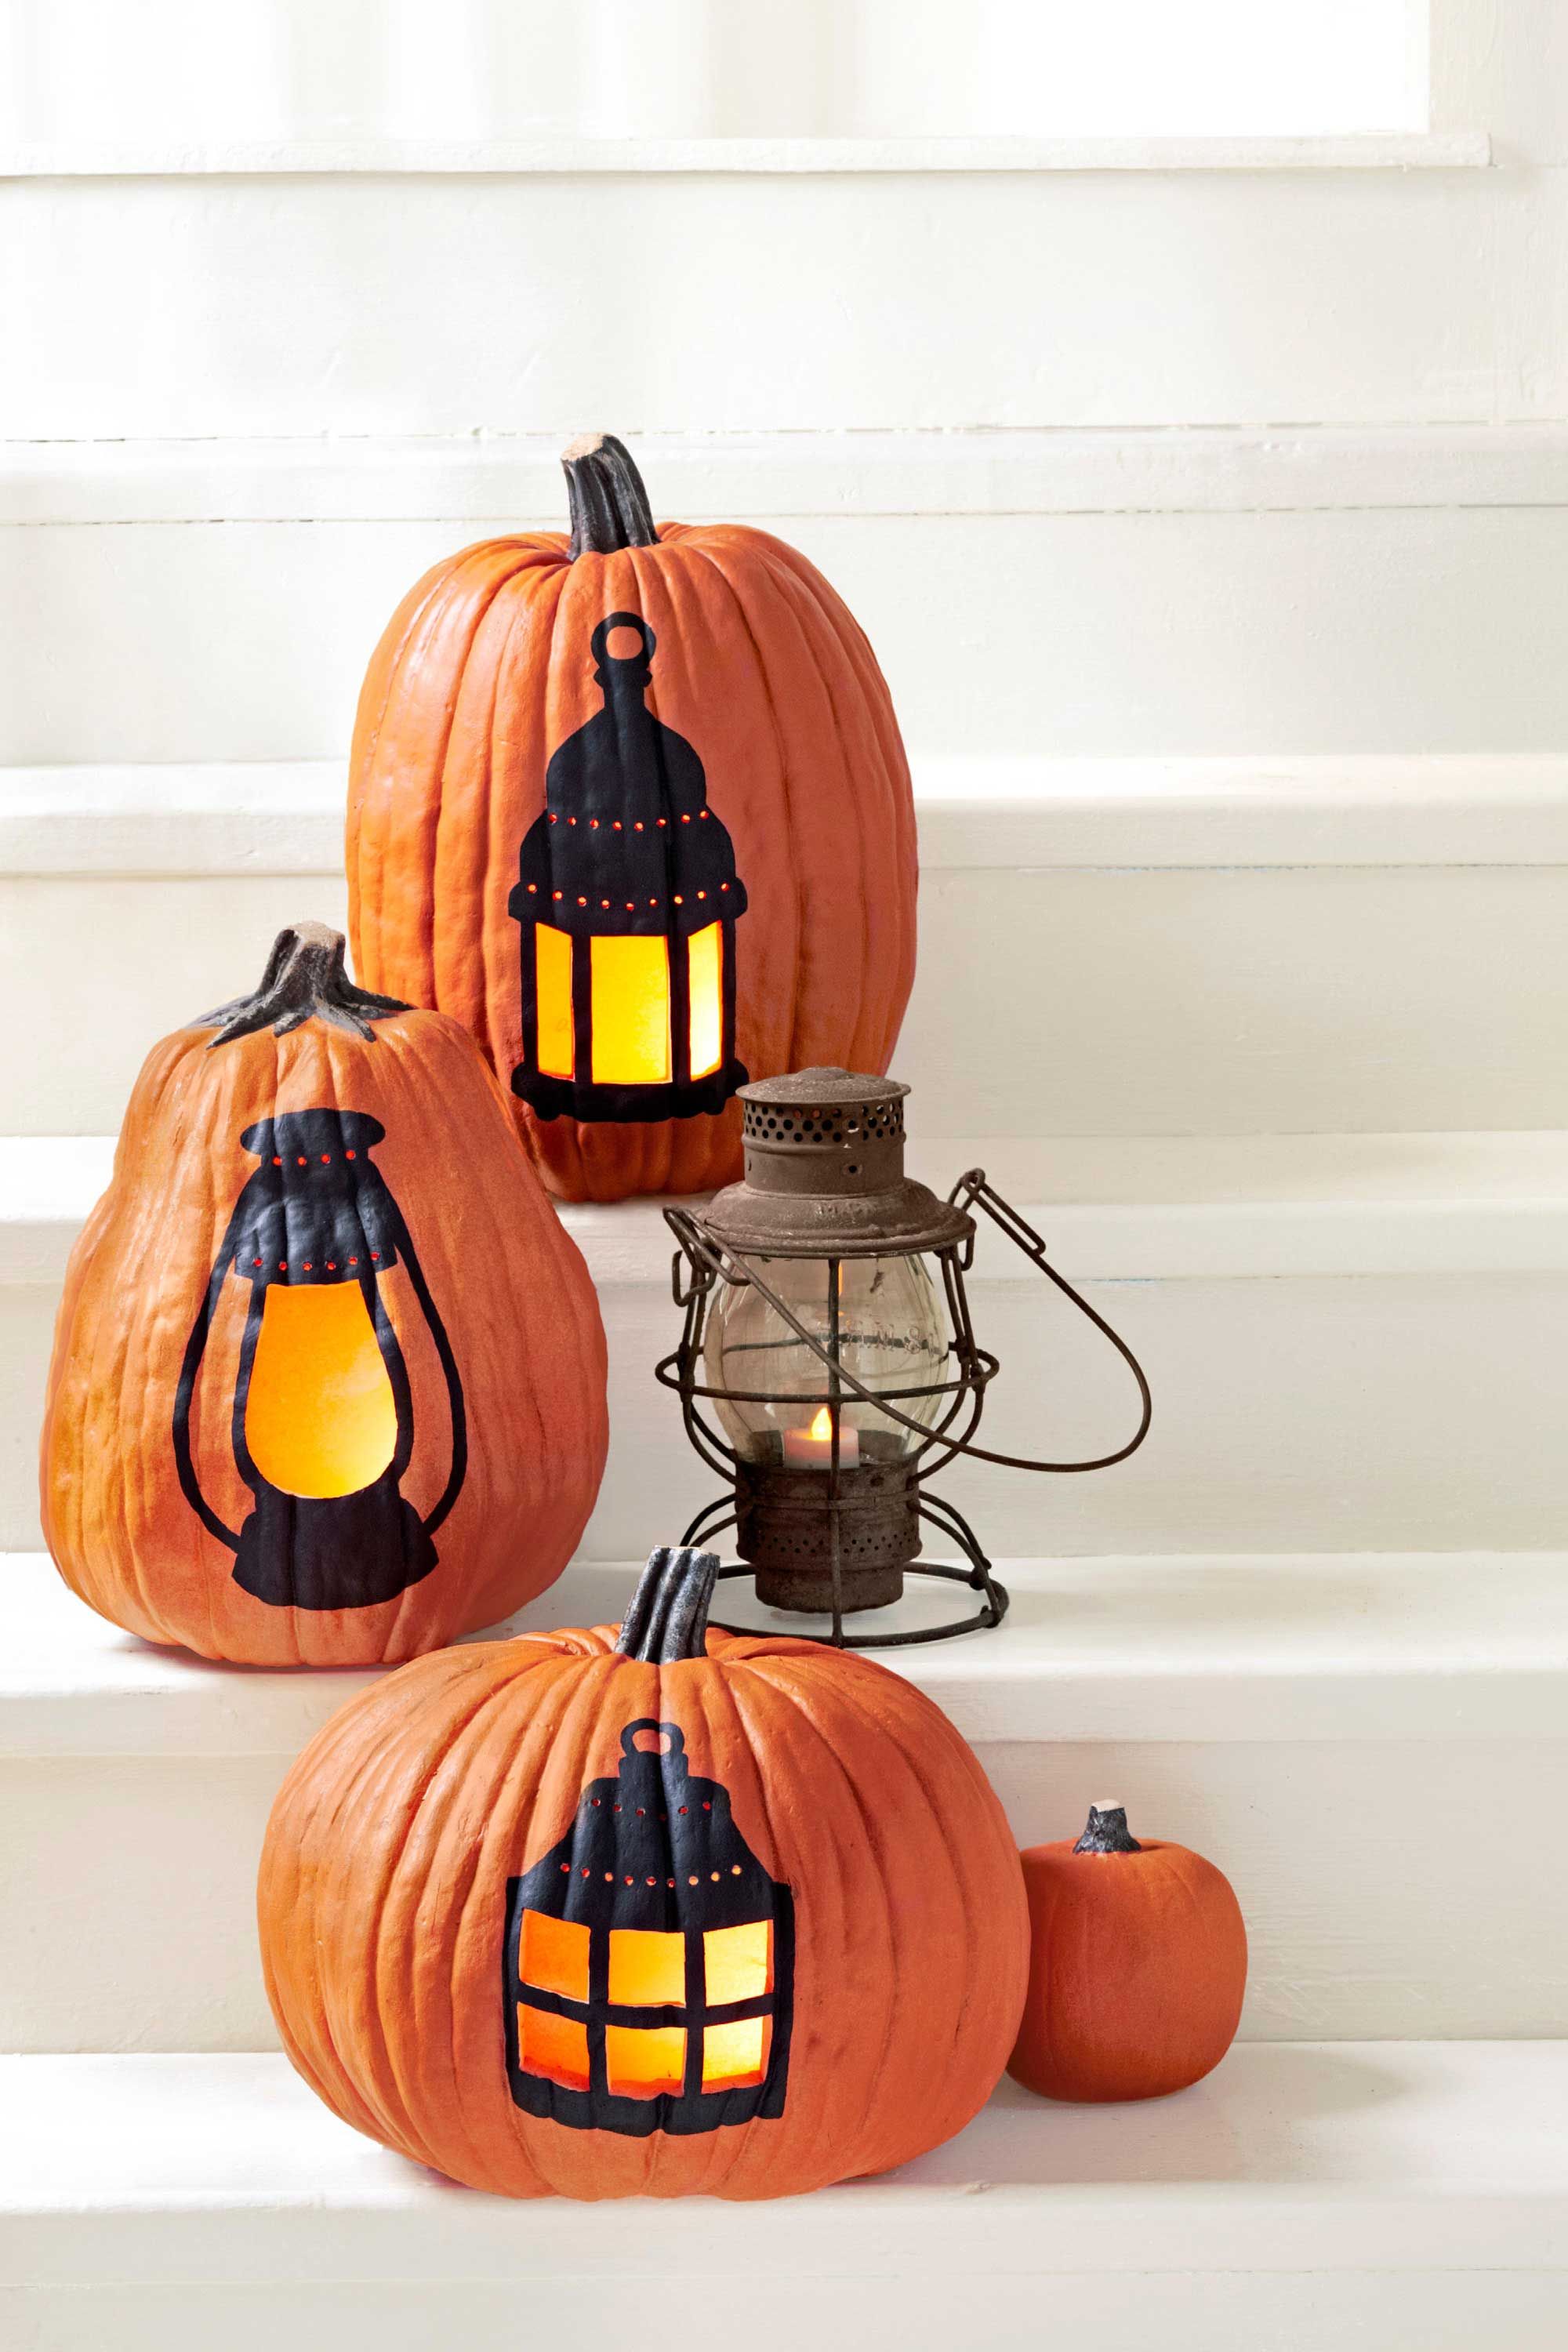 76 Easy Pumpkin Carving Ideas 2021 Fun Patterns Designs For Jack O Lanterns - roblox pumpkin carving ideas